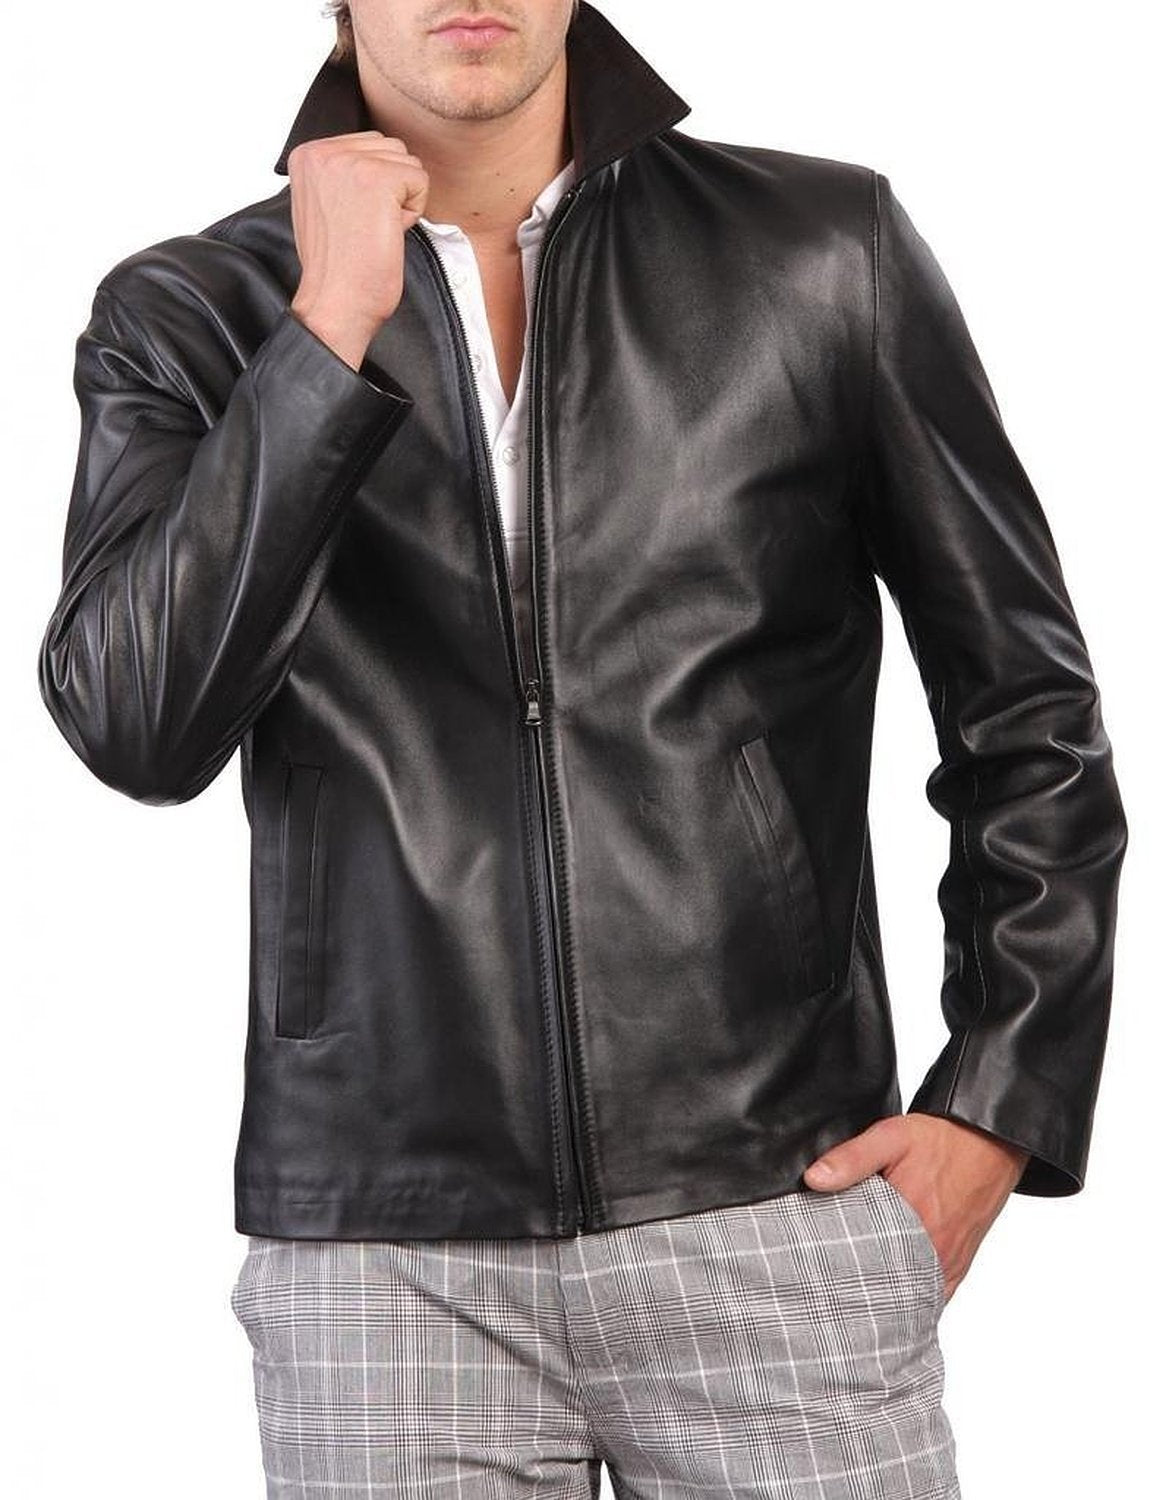 Leather Jackets Hub Mens Genuine Lambskin Leather Jacket (Black, Aviator Jacket) - 1501331